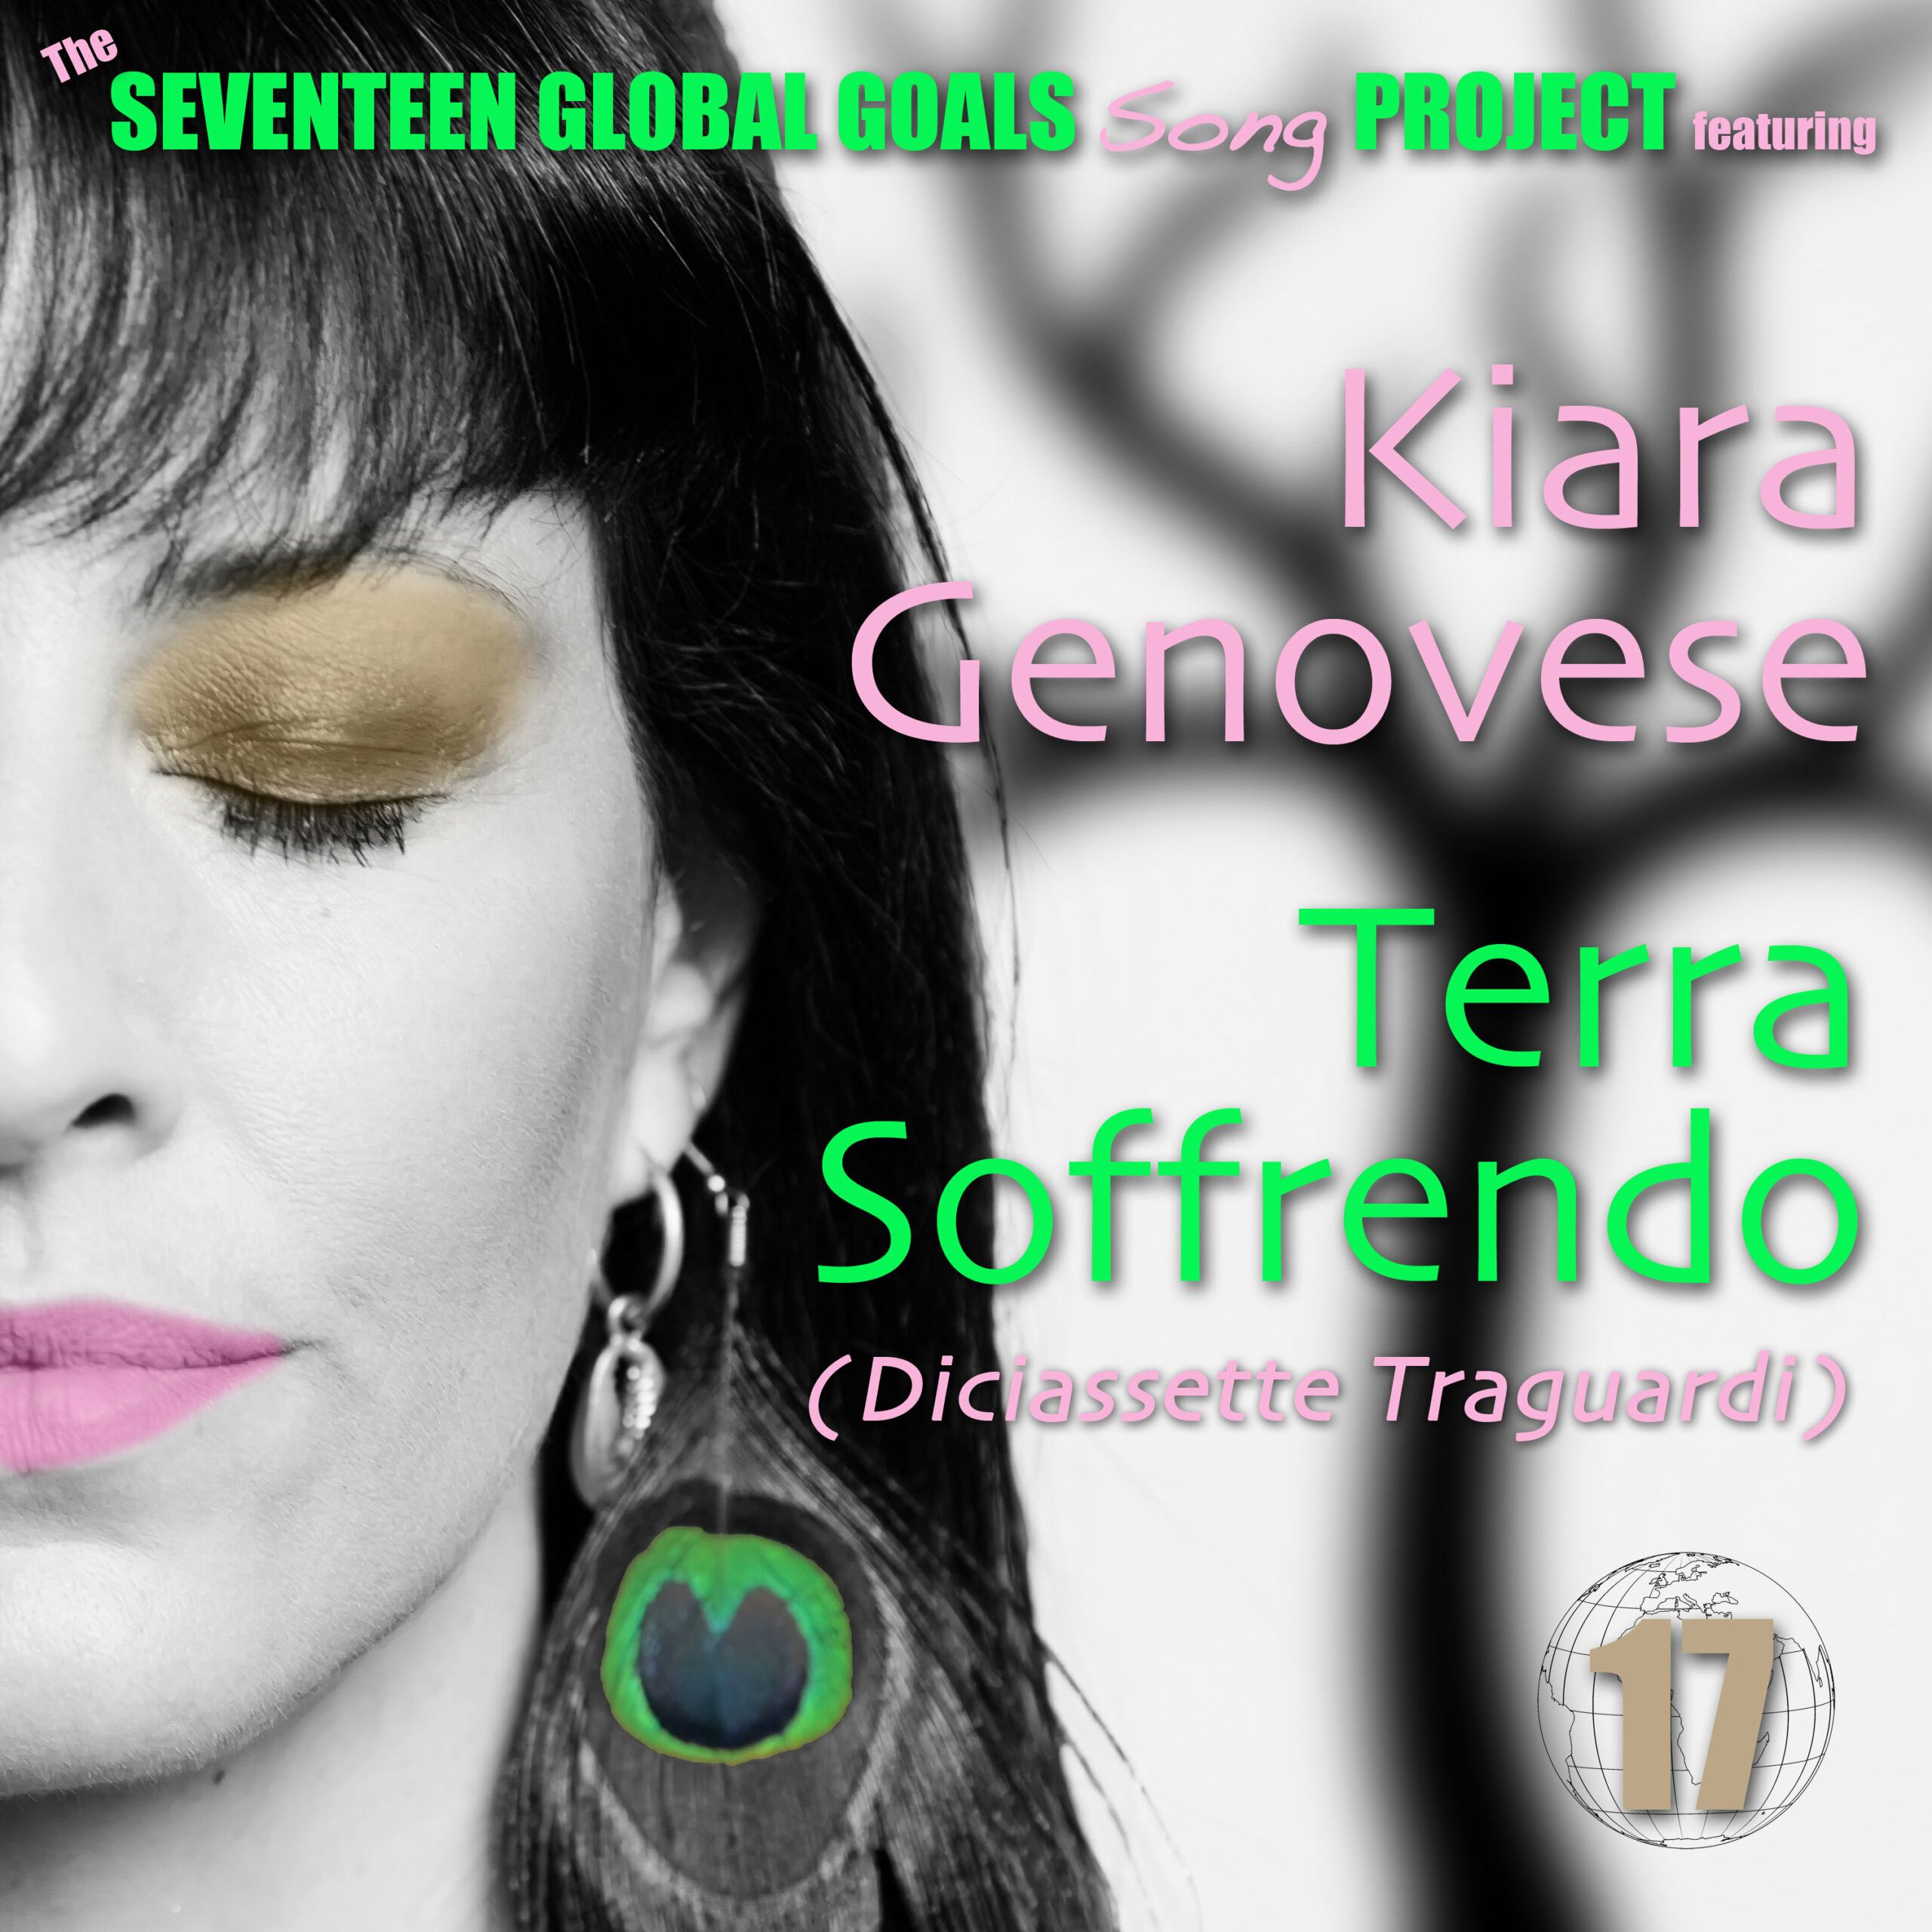 17gg_kiara_genovese_terra_sofrendo_diciassette_traguardi